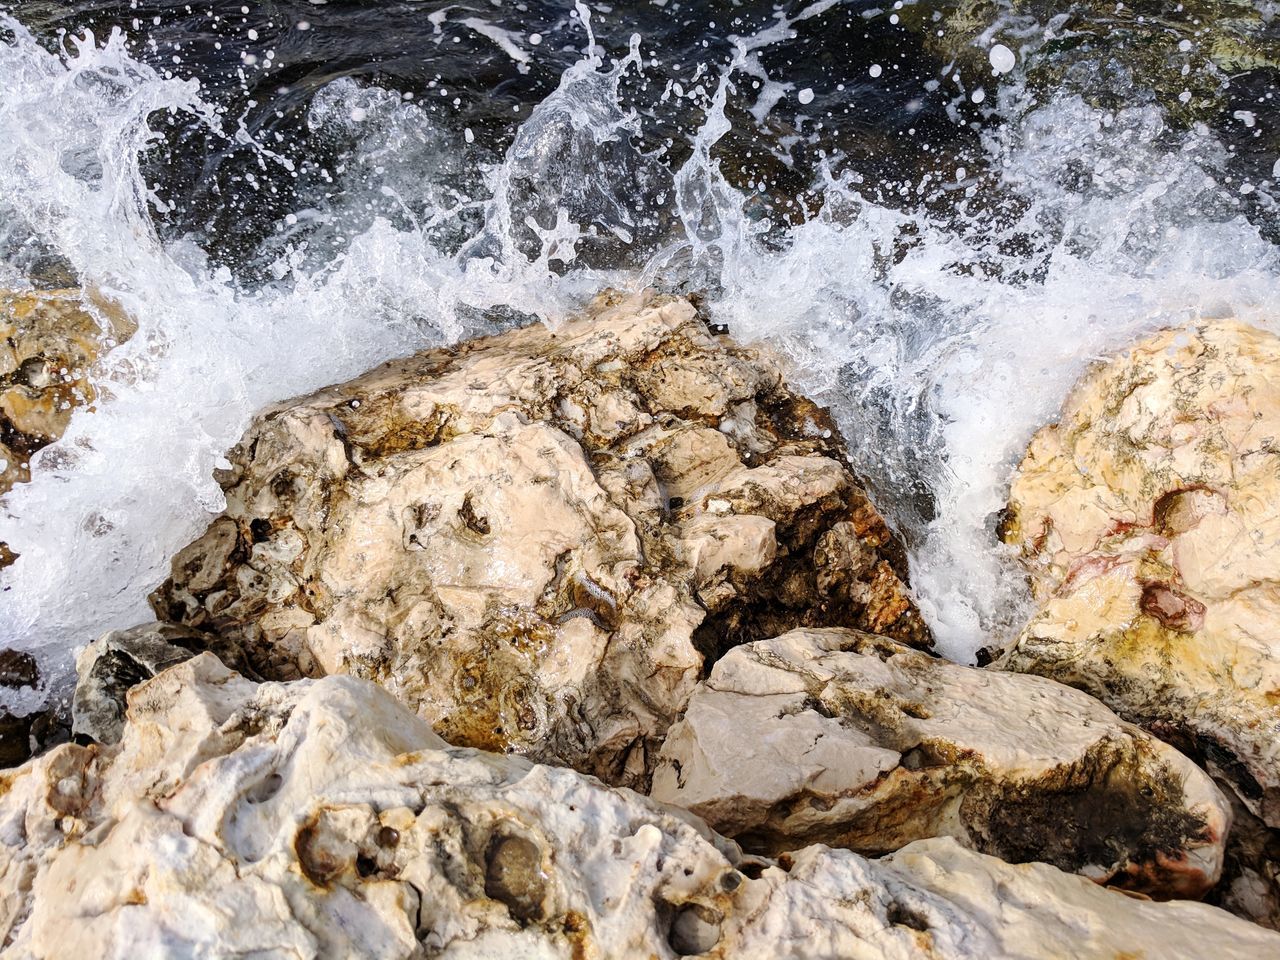 SCENIC VIEW OF ROCKS IN SEA